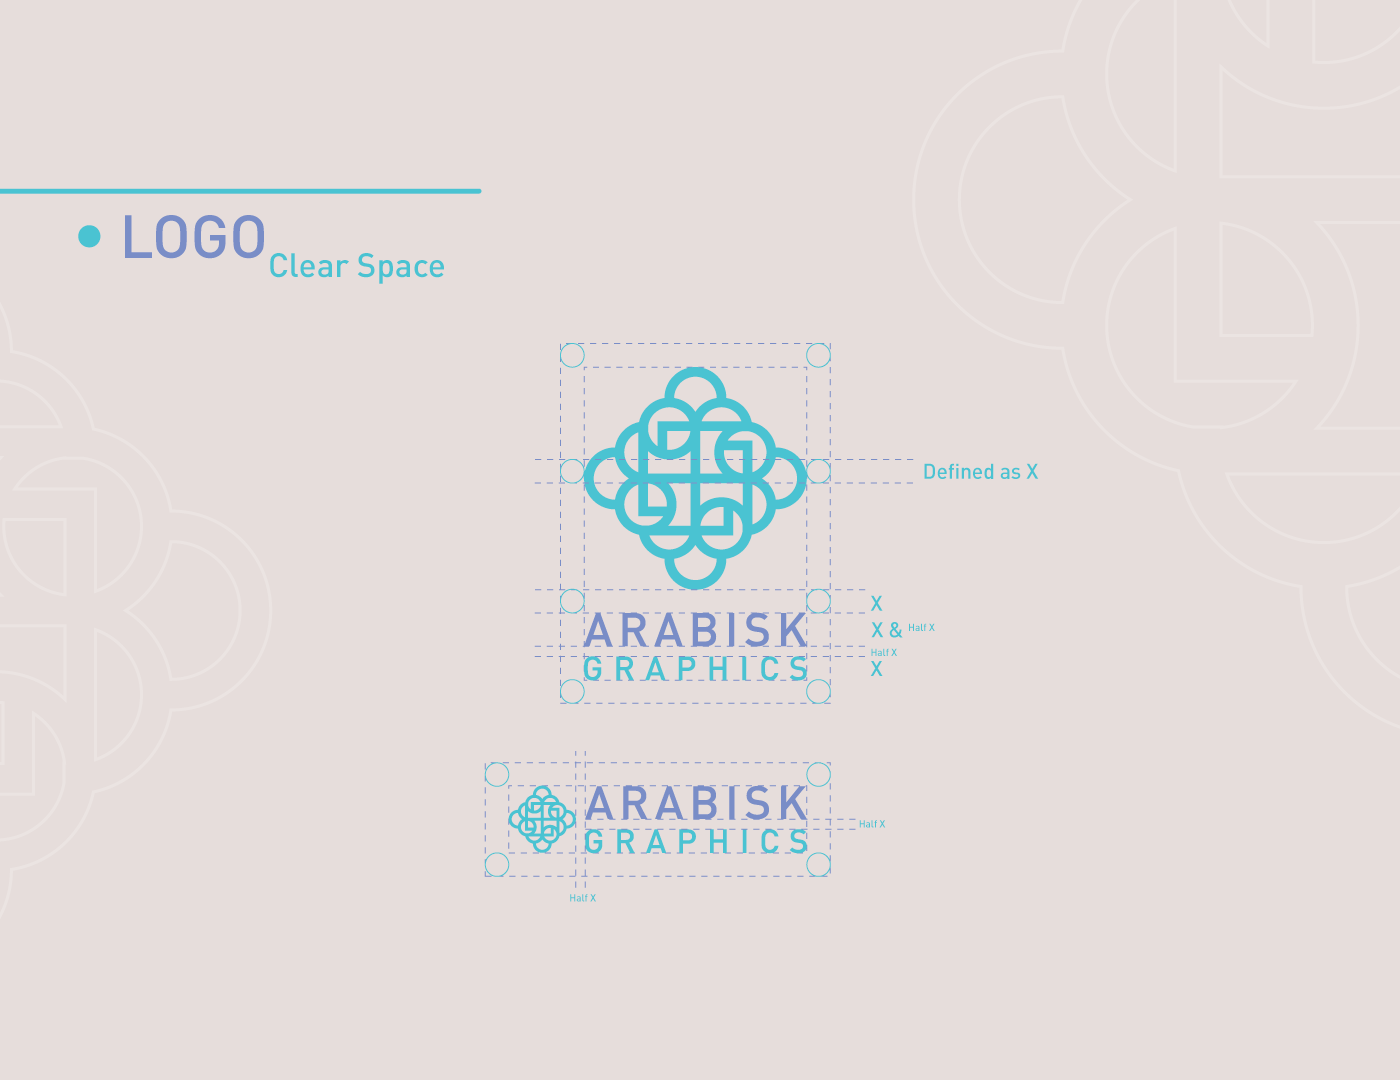 Arabisk Graphics Old Brand